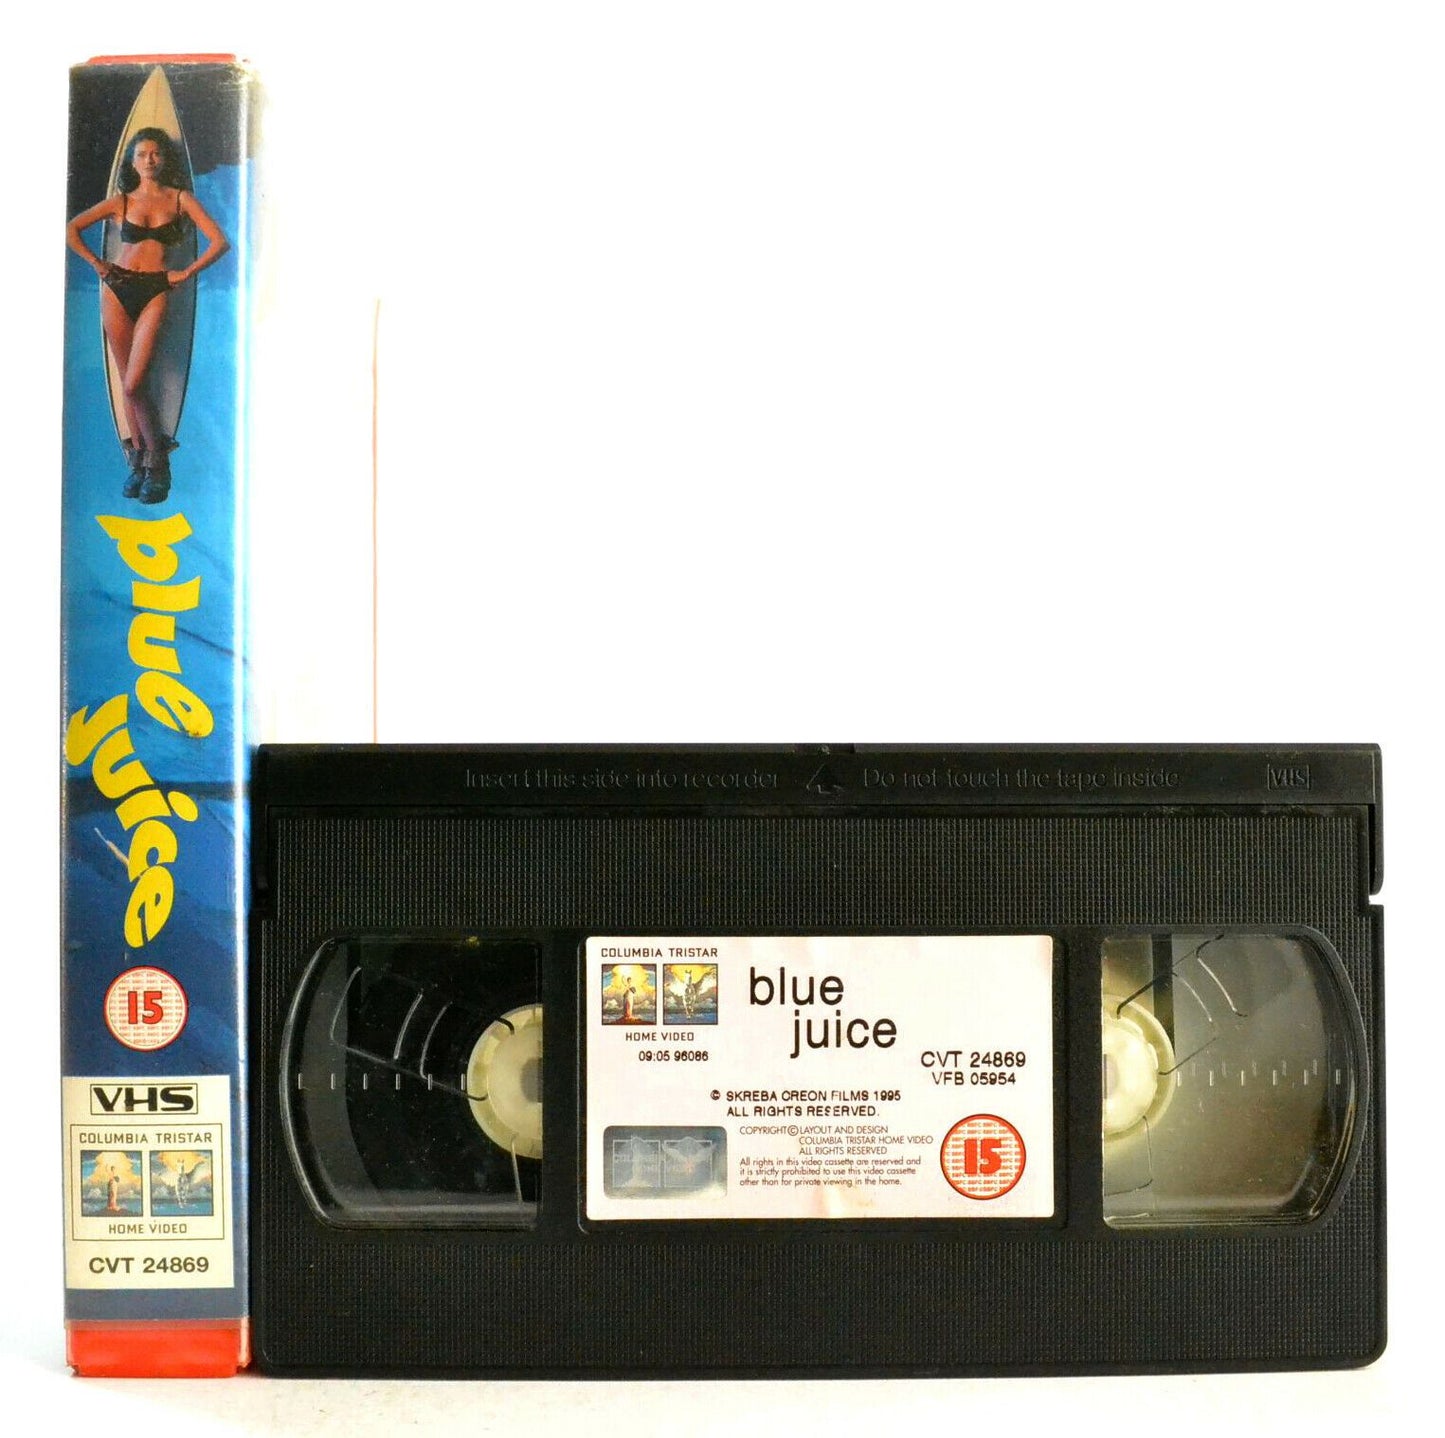 Blue Juice: British Comedy/Drama - Catherine Zeta Jones - Large Box - Pal VHS-